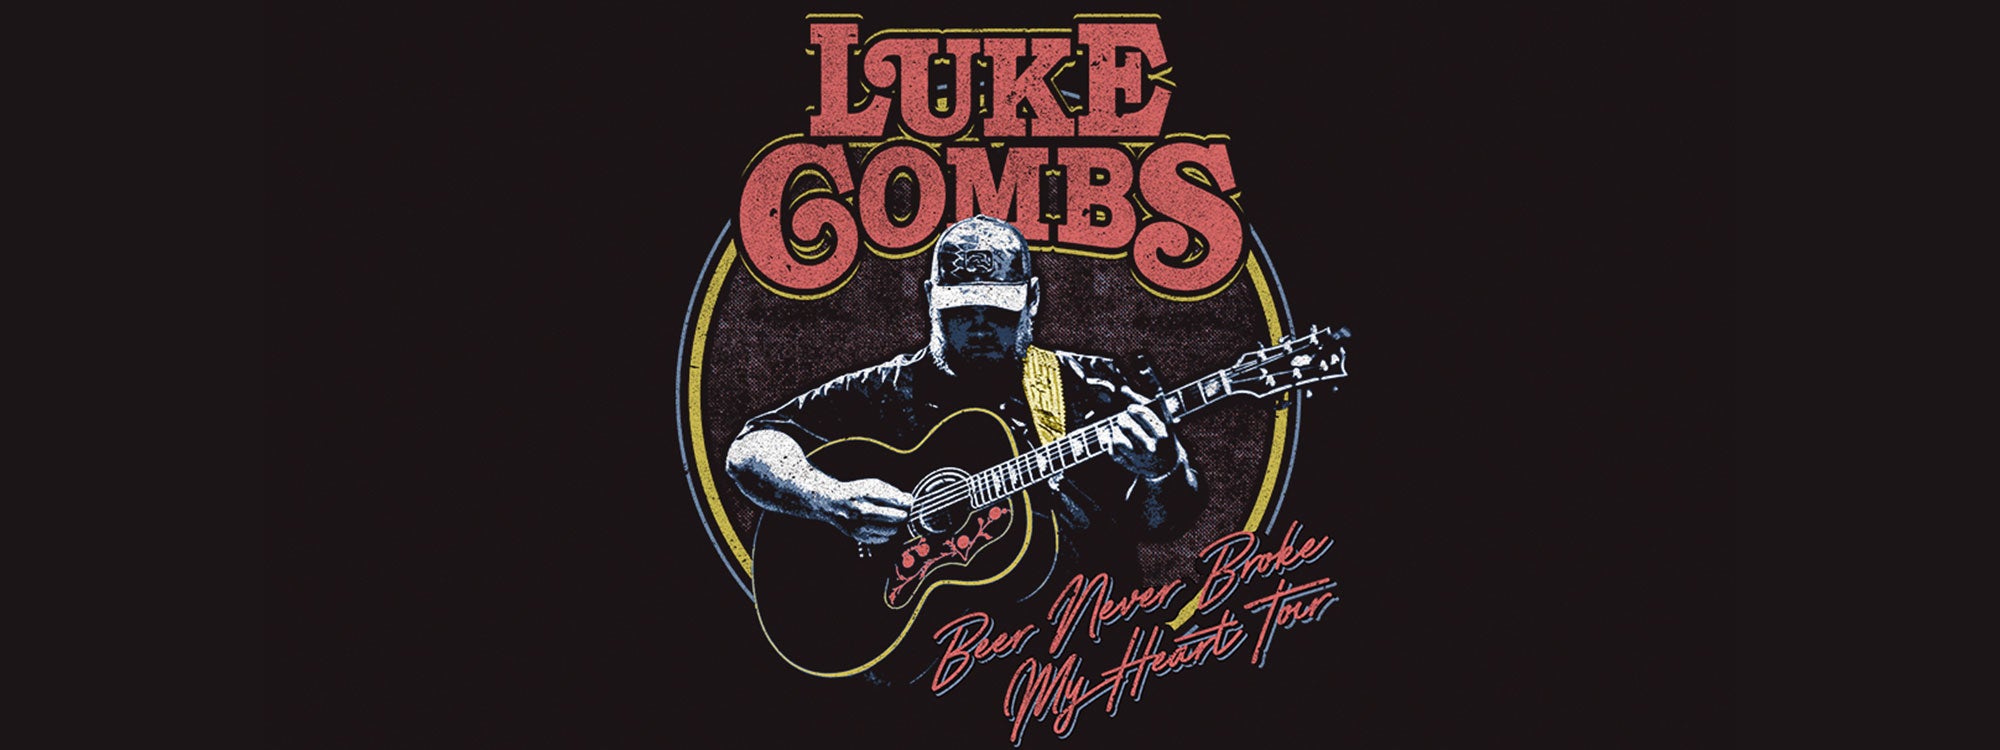 Luke Combs